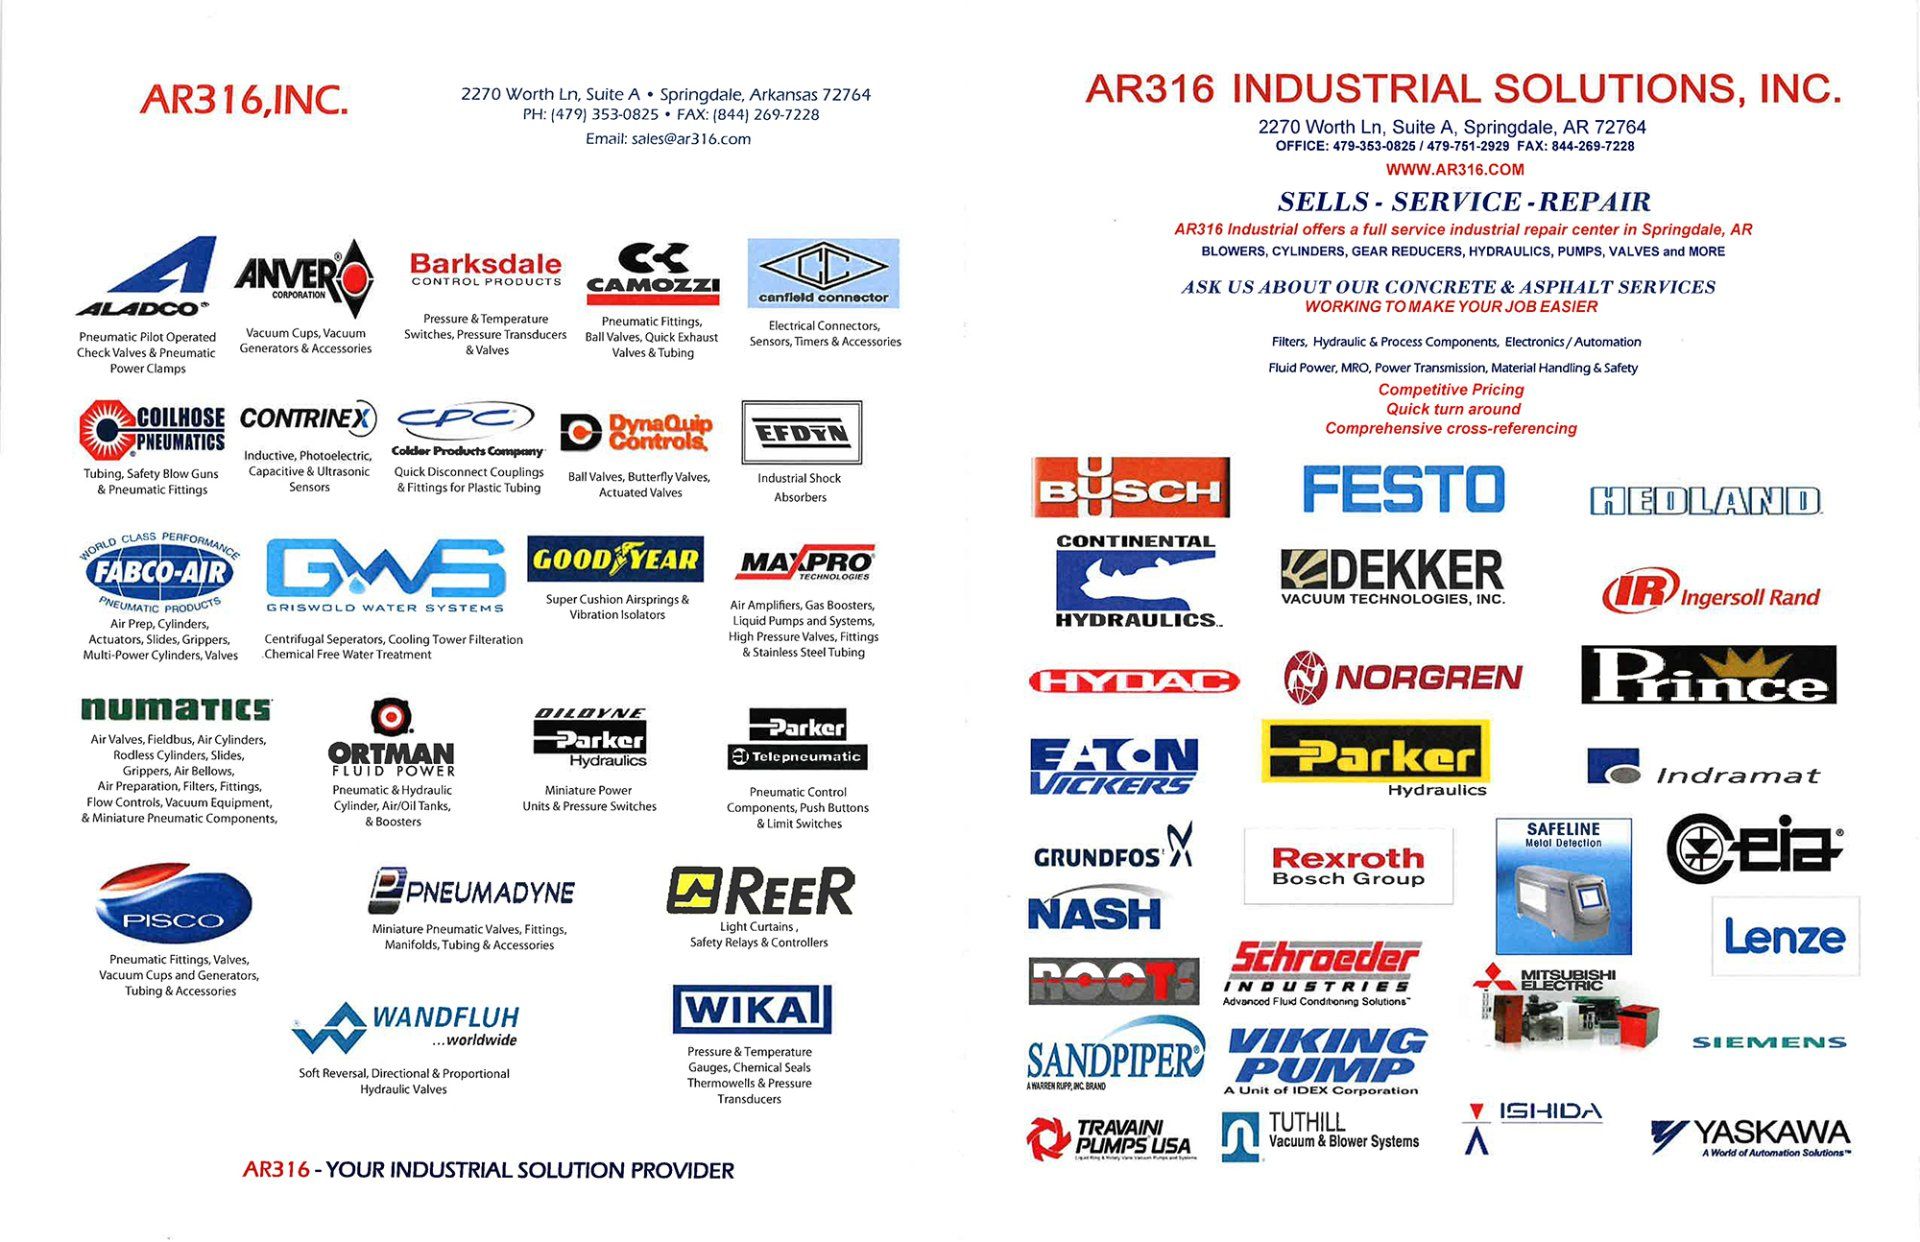 AR316 Industrial Solutions, INC.